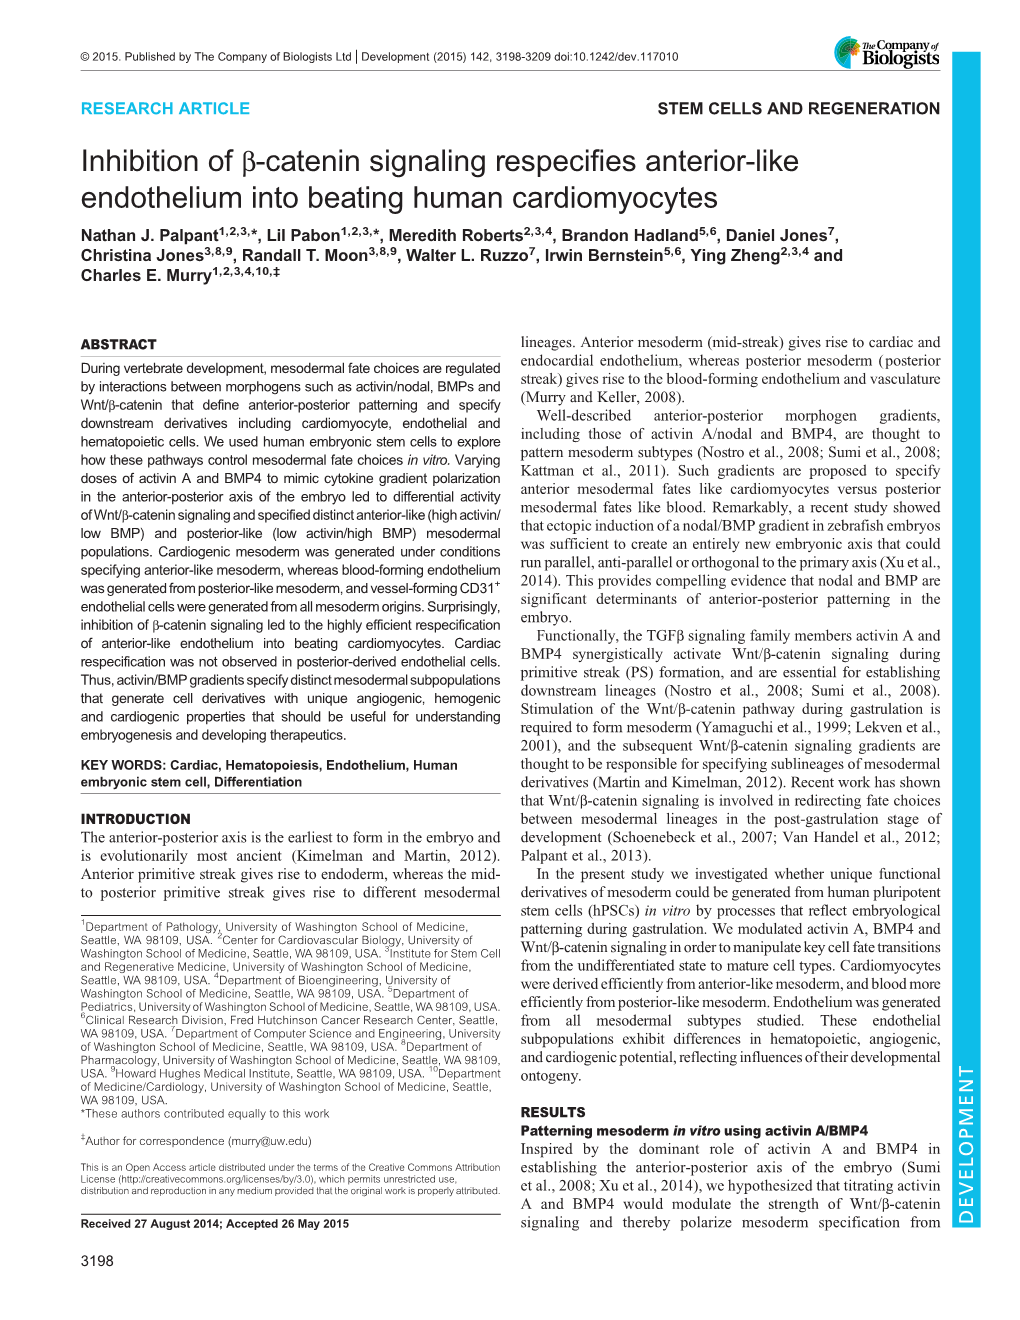 Inhibition of Β-Catenin Signaling Respecifies Anterior-Like Endothelium Into Beating Human Cardiomyocytes Nathan J